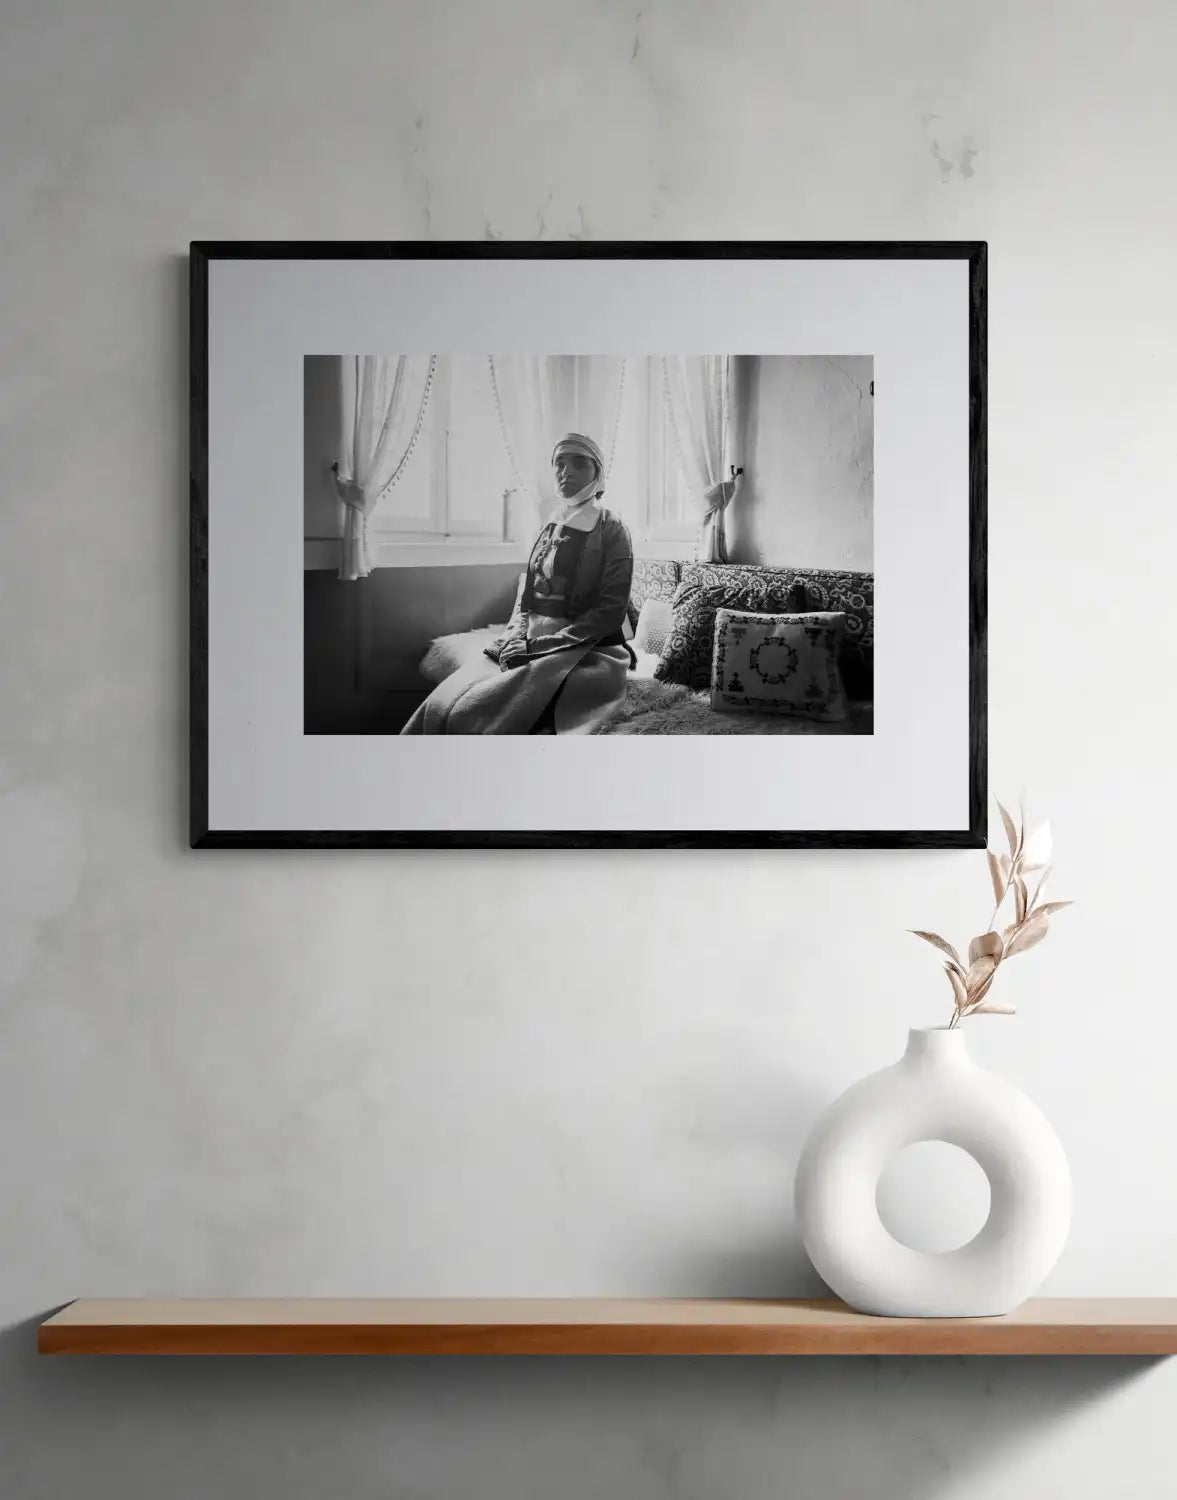 Paleopyrgos, Pogoni, Epirus, Greece | Sitting Portrait | Black-and-White Wall Art Photography - single print framed